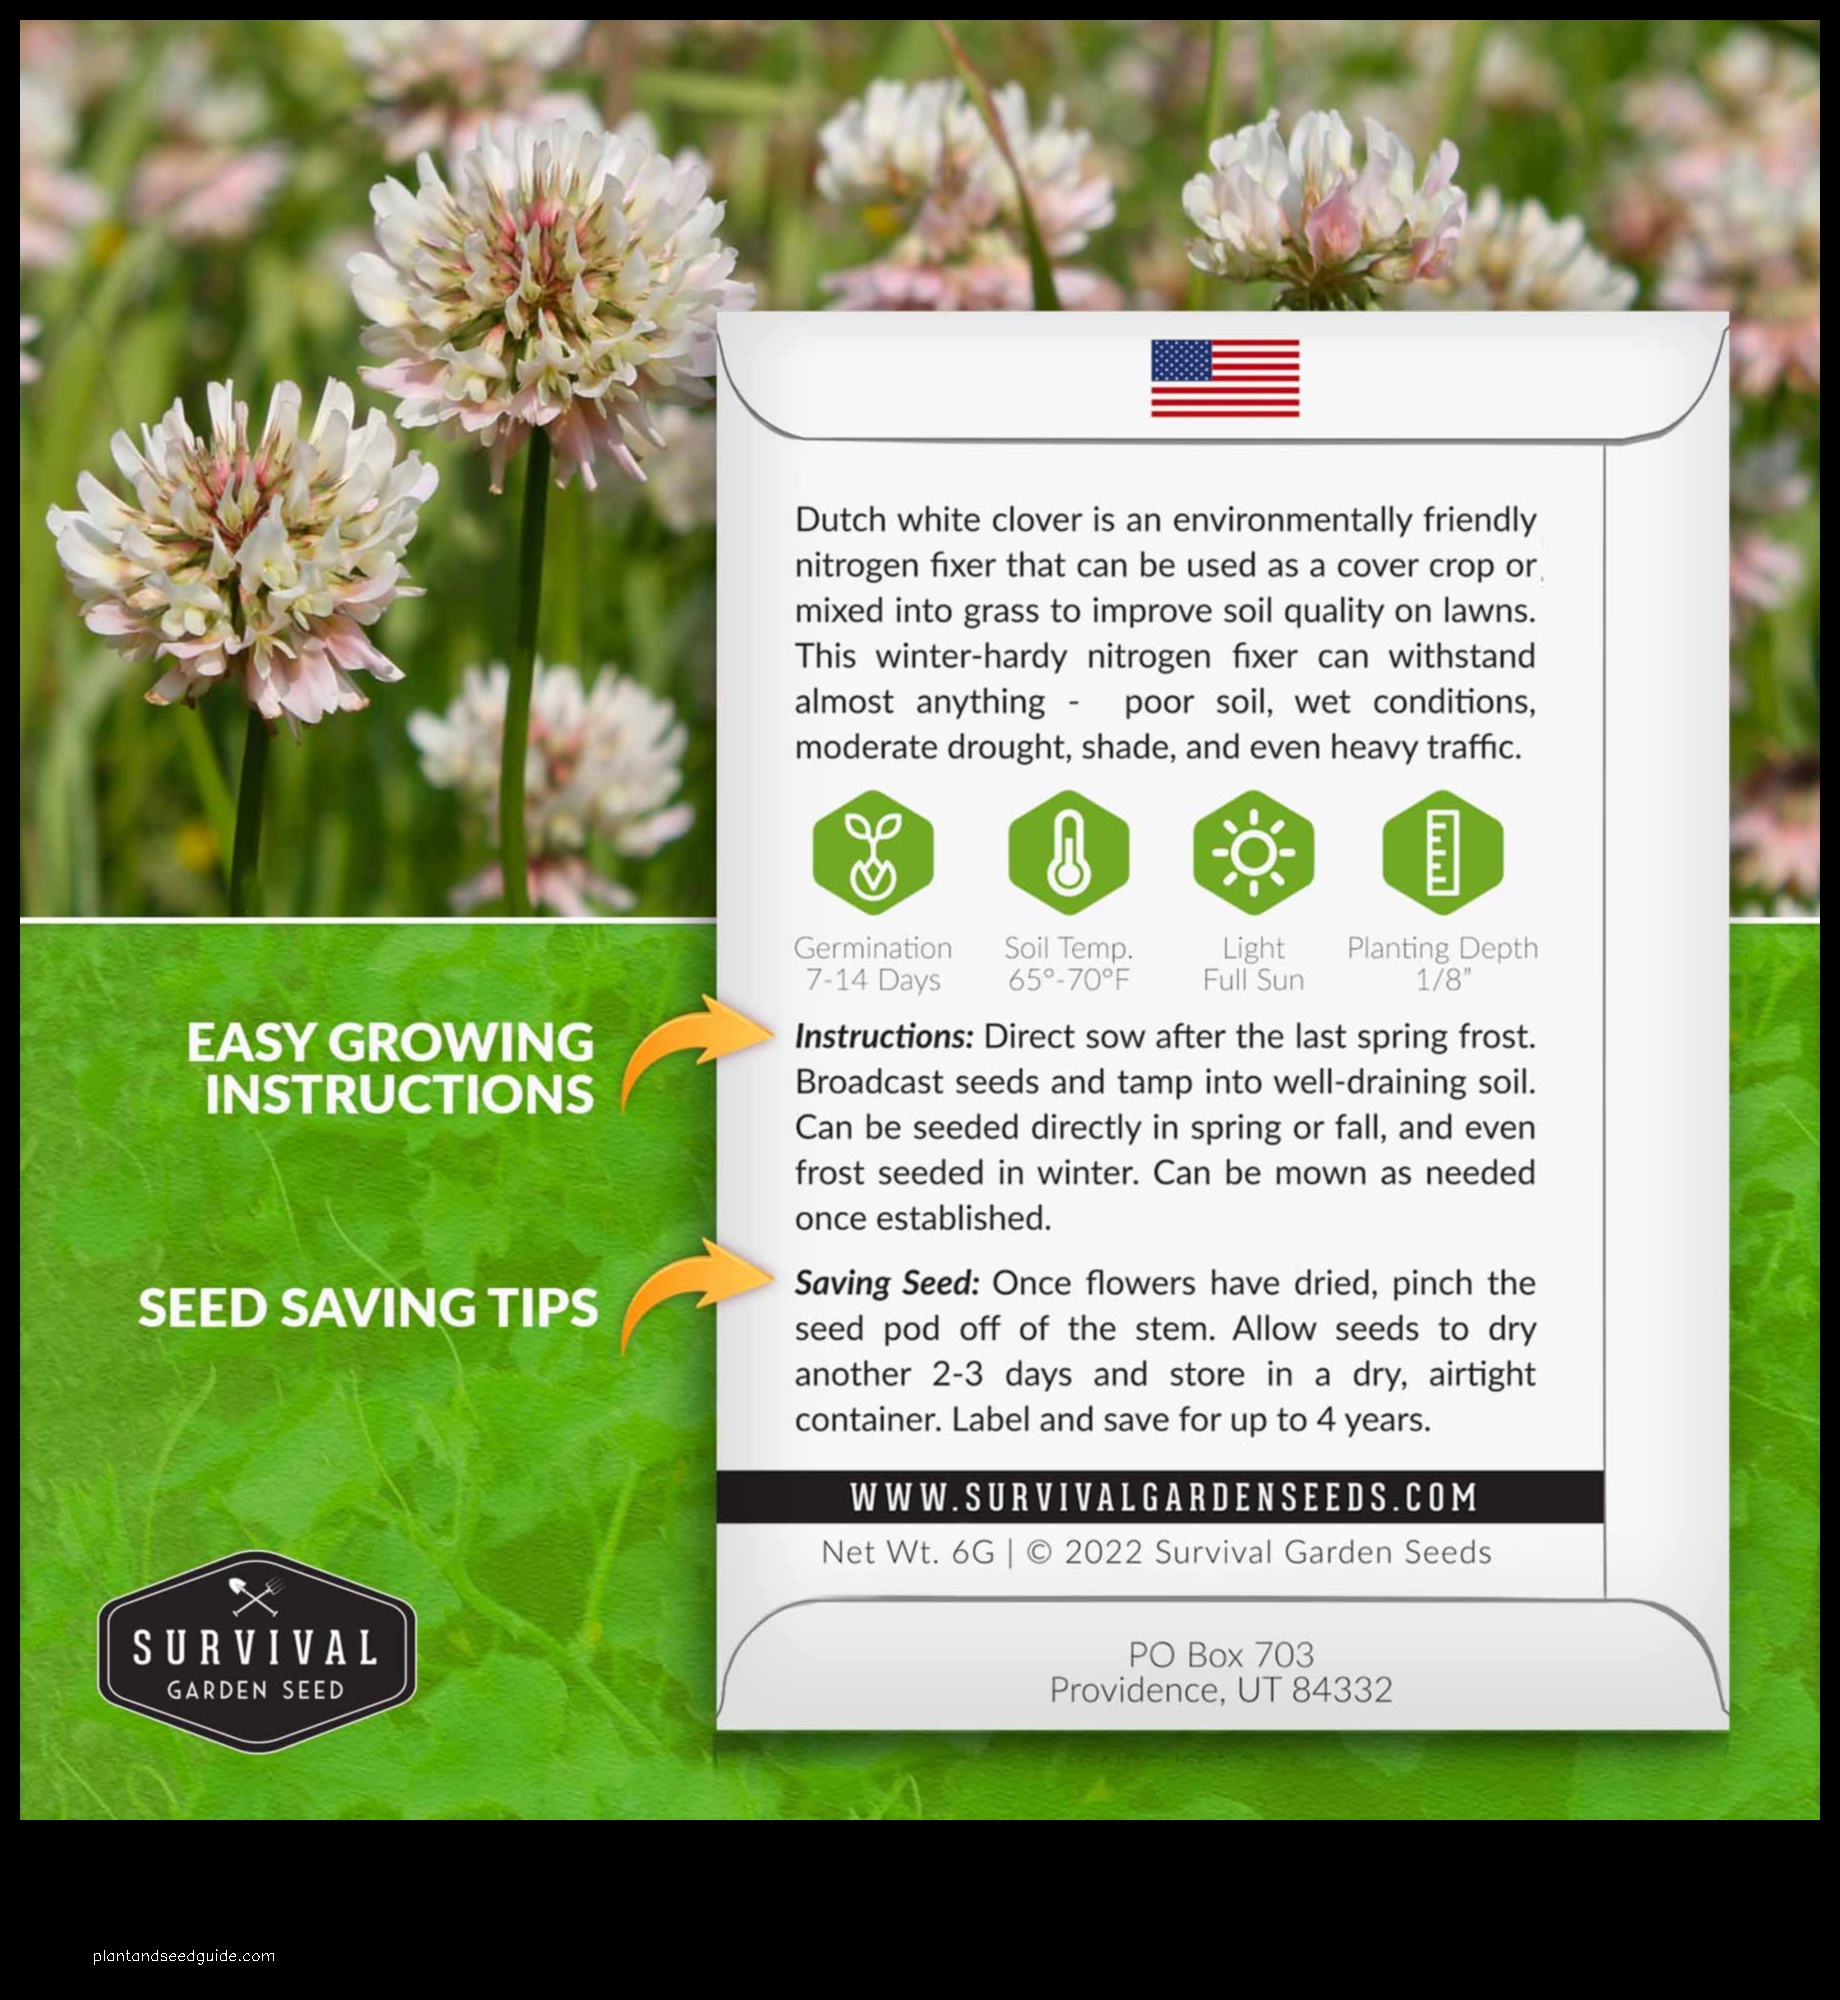 white clover benefits